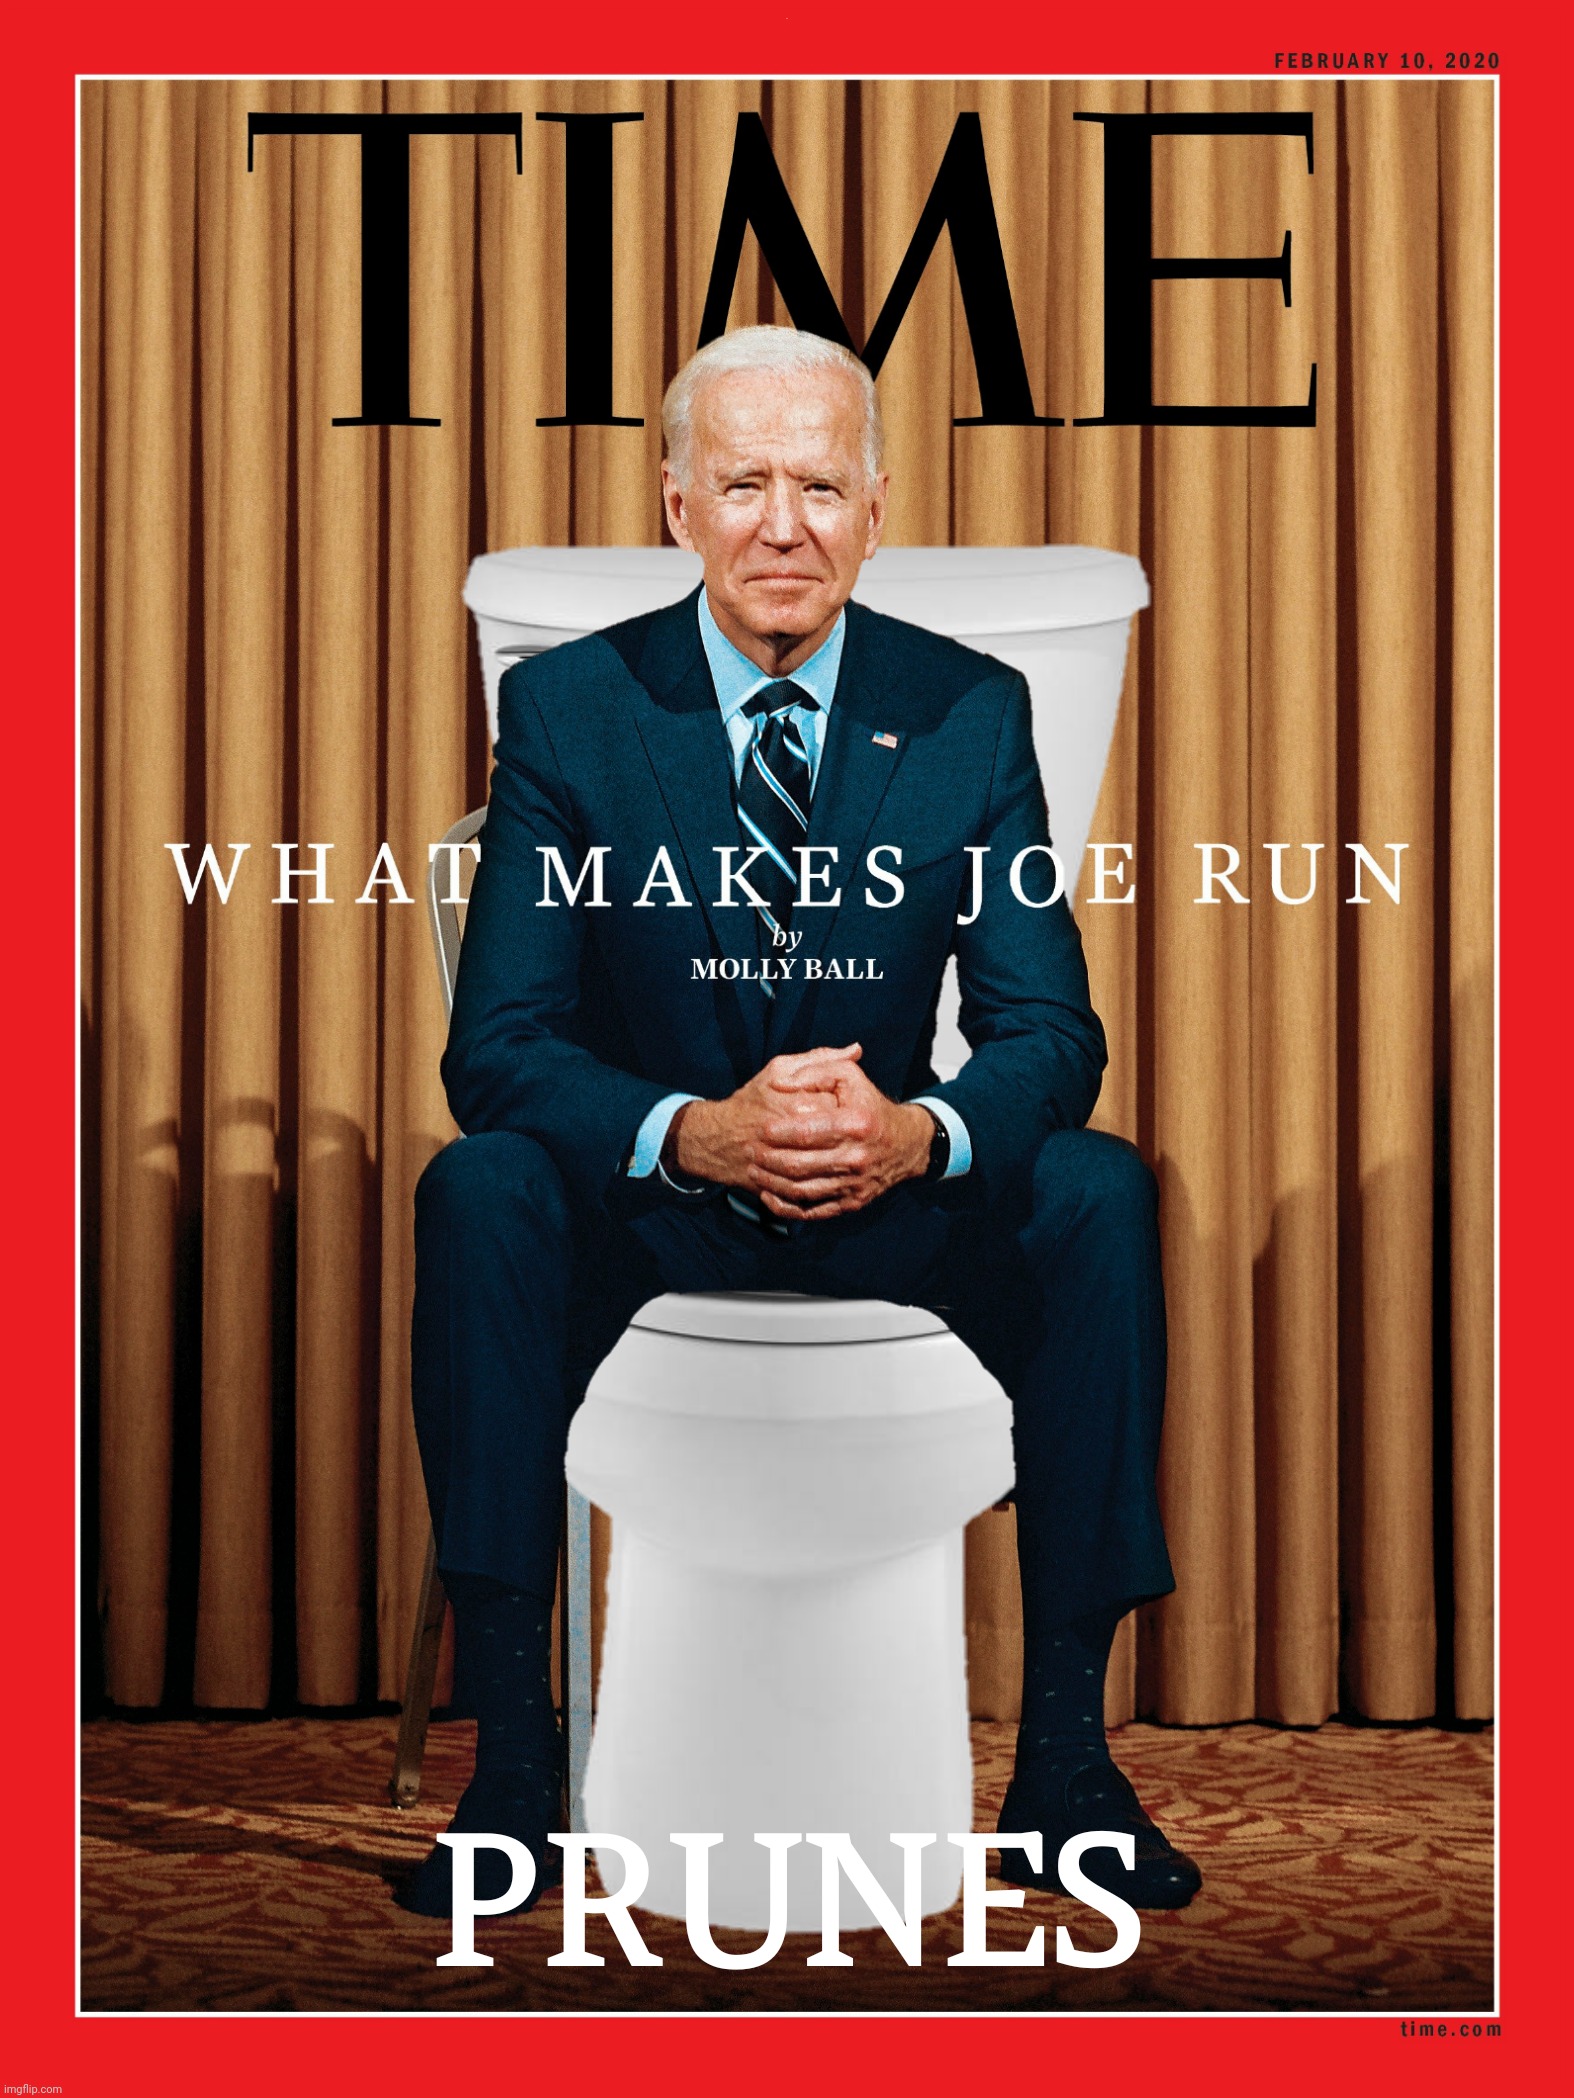 Run, Joe, run! | B | image tagged in bad photoshop,joe biden,time magazine,toilet,prunes | made w/ Imgflip meme maker